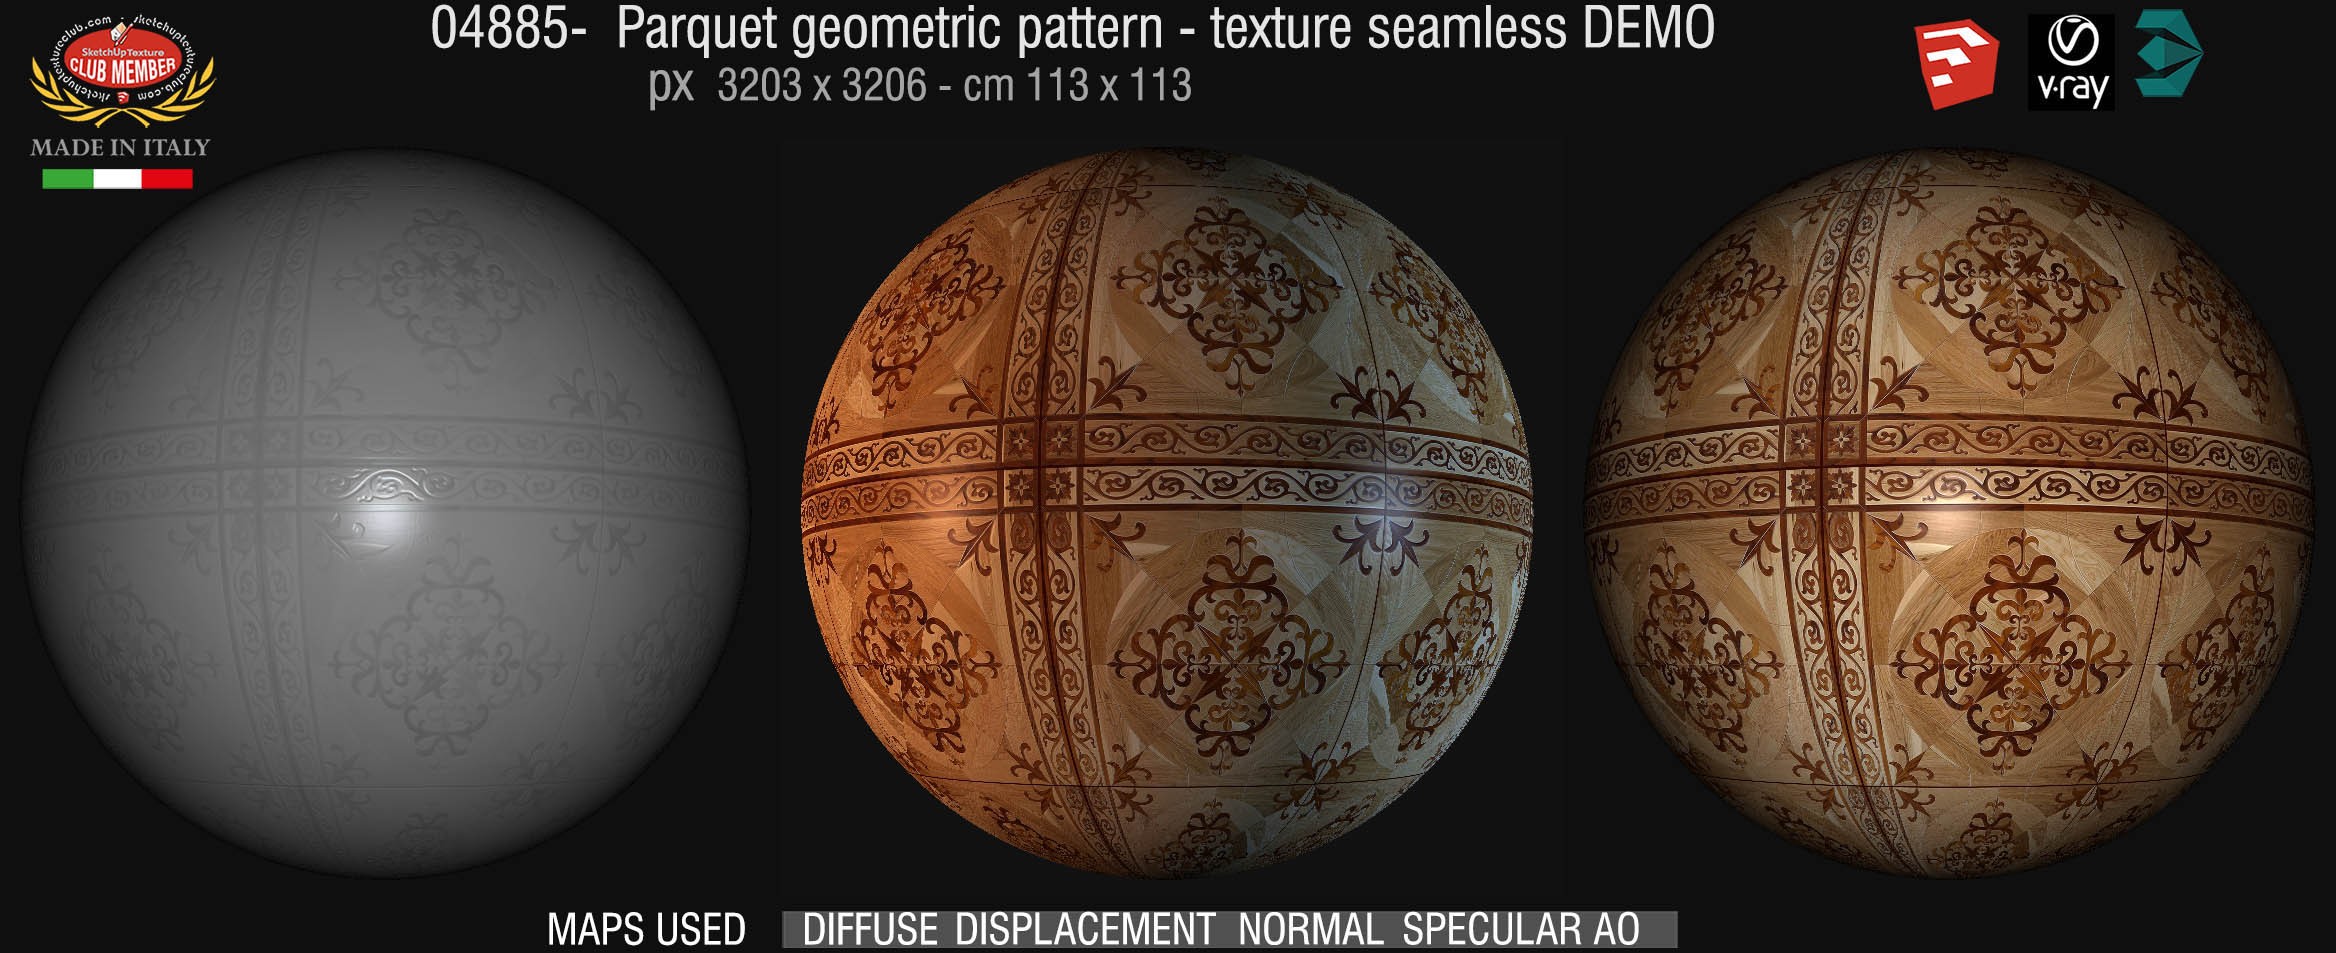 04885 Parquet geometric pattern texture seamless + maps DEMO